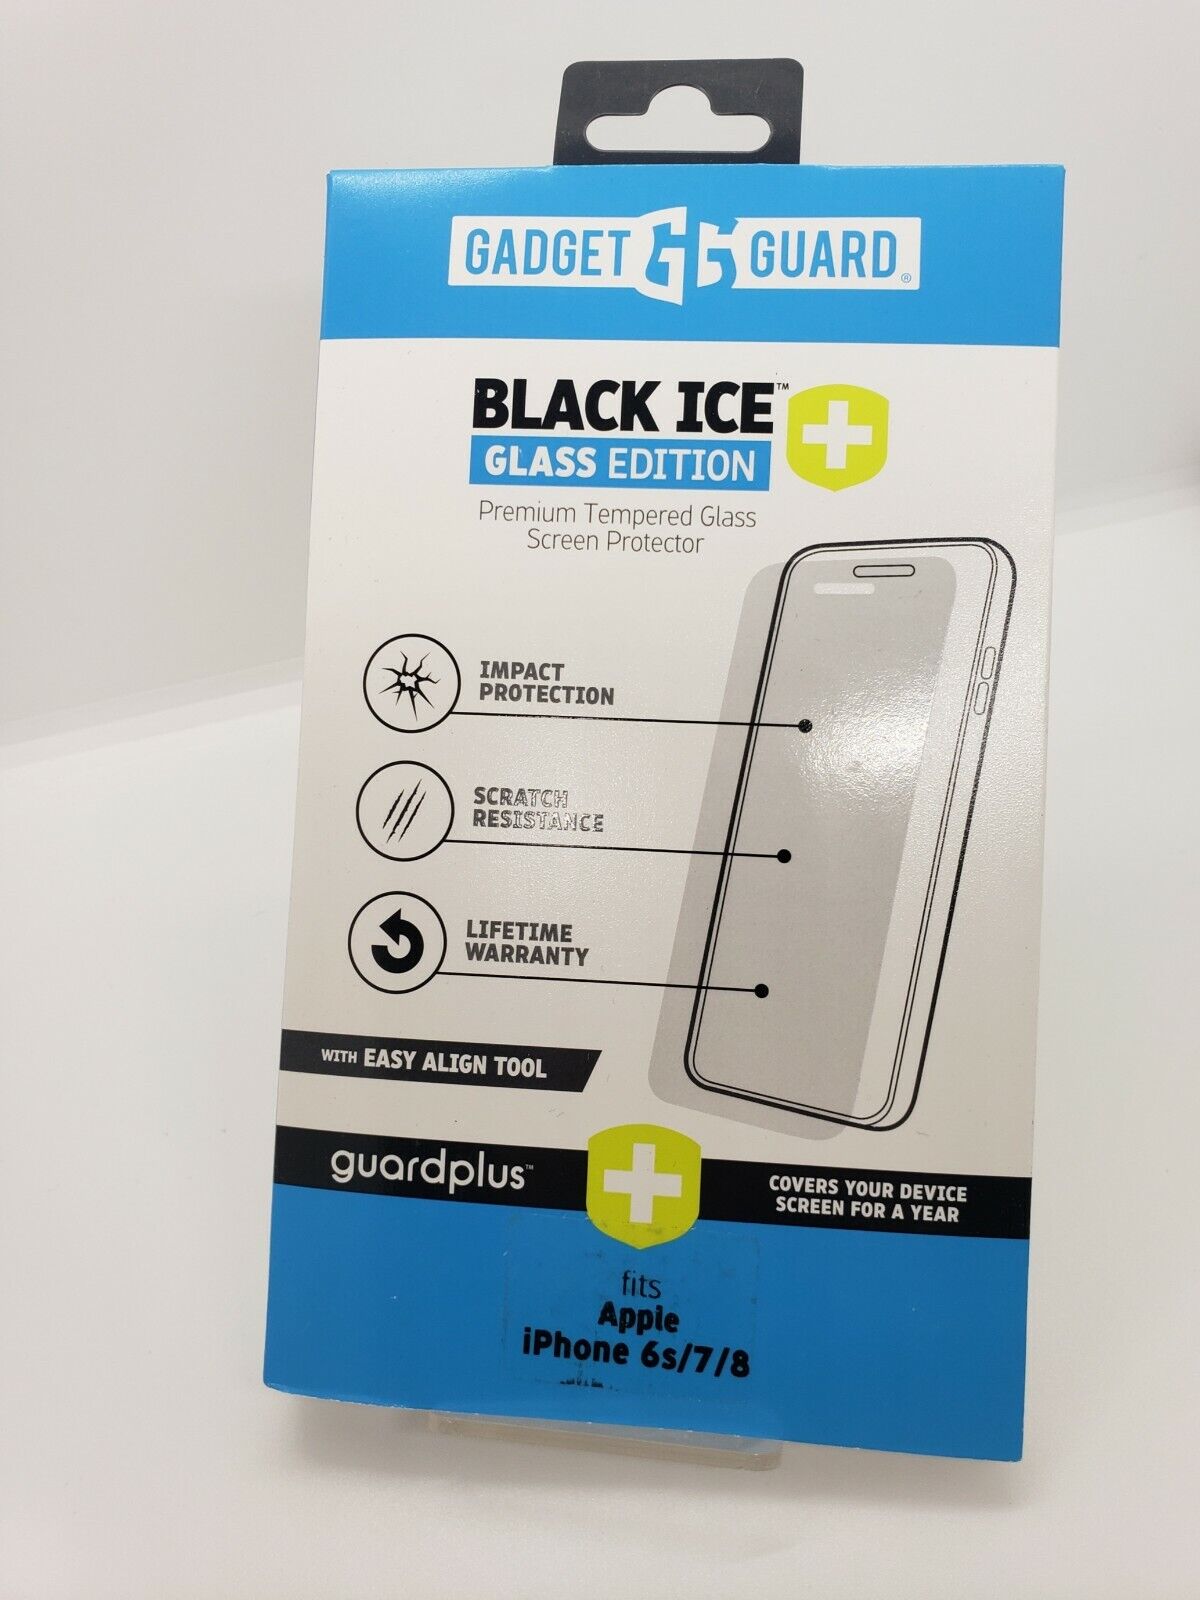 Gadget Guard Black Ice + Edition Screen Protector 5s/SE/6s/7/8/ X/XS 11Pro/Max